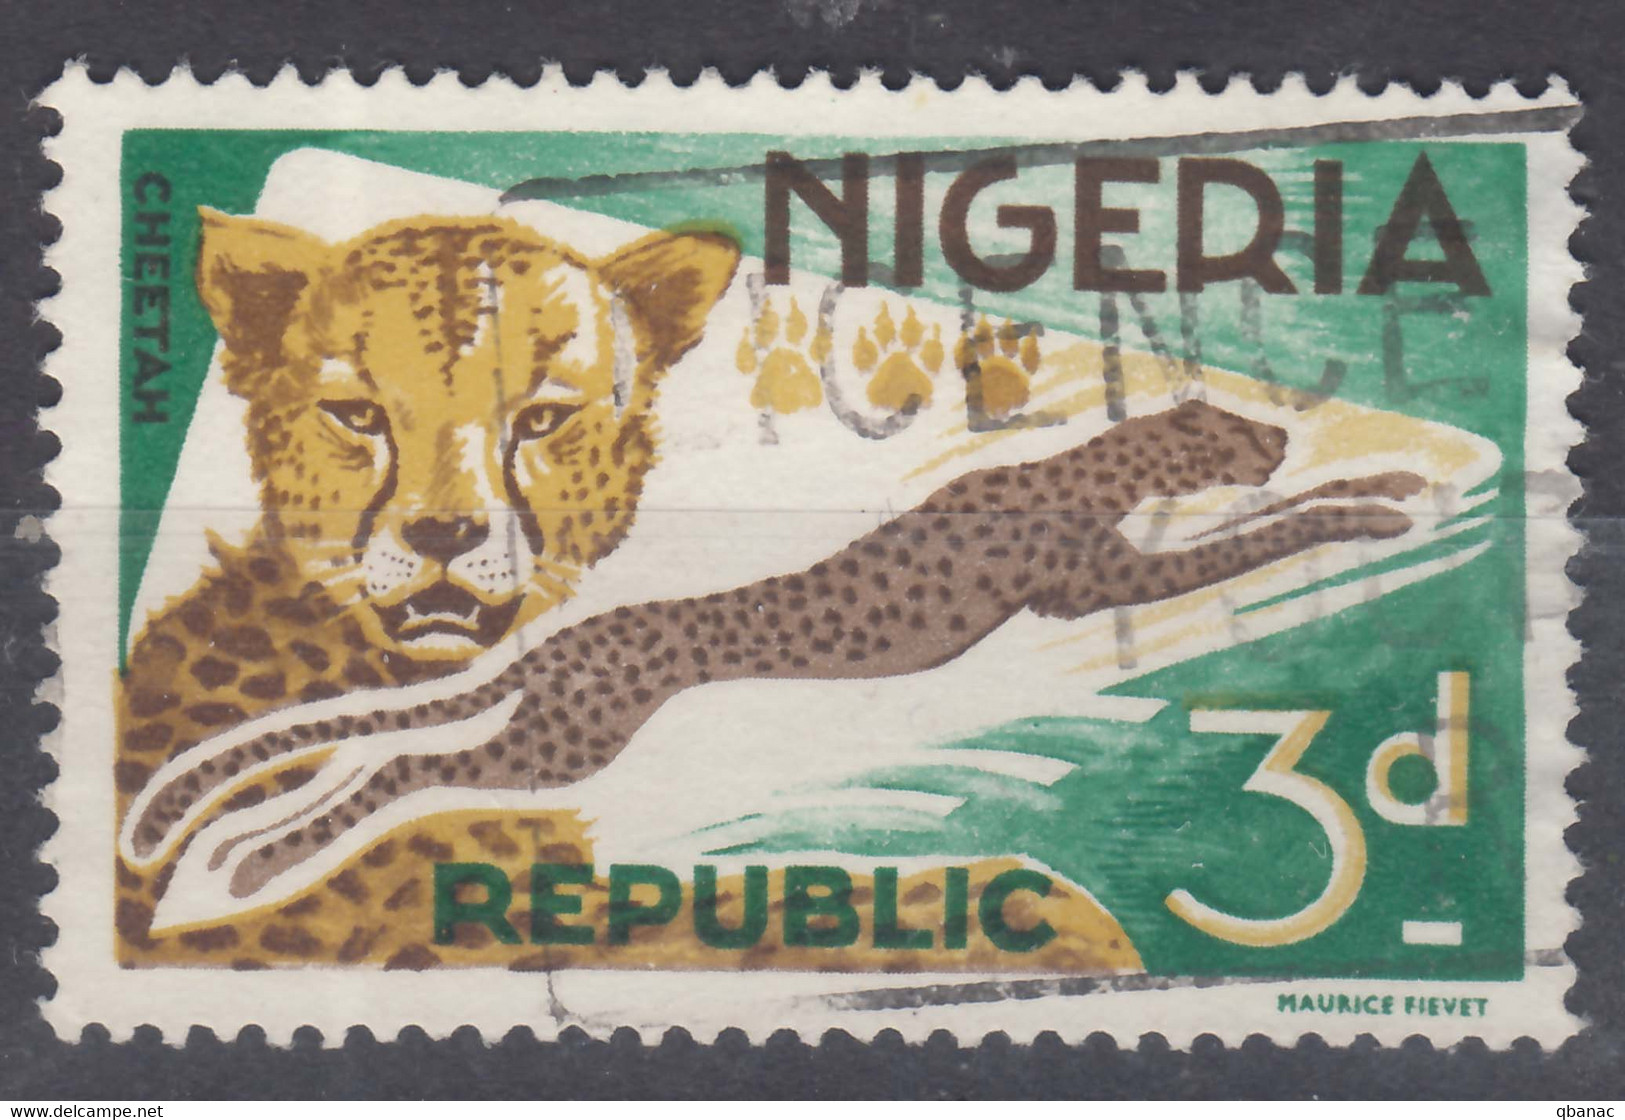 Nigeria 1965/1966 Mi#179 A I, Used - Nigeria (1961-...)